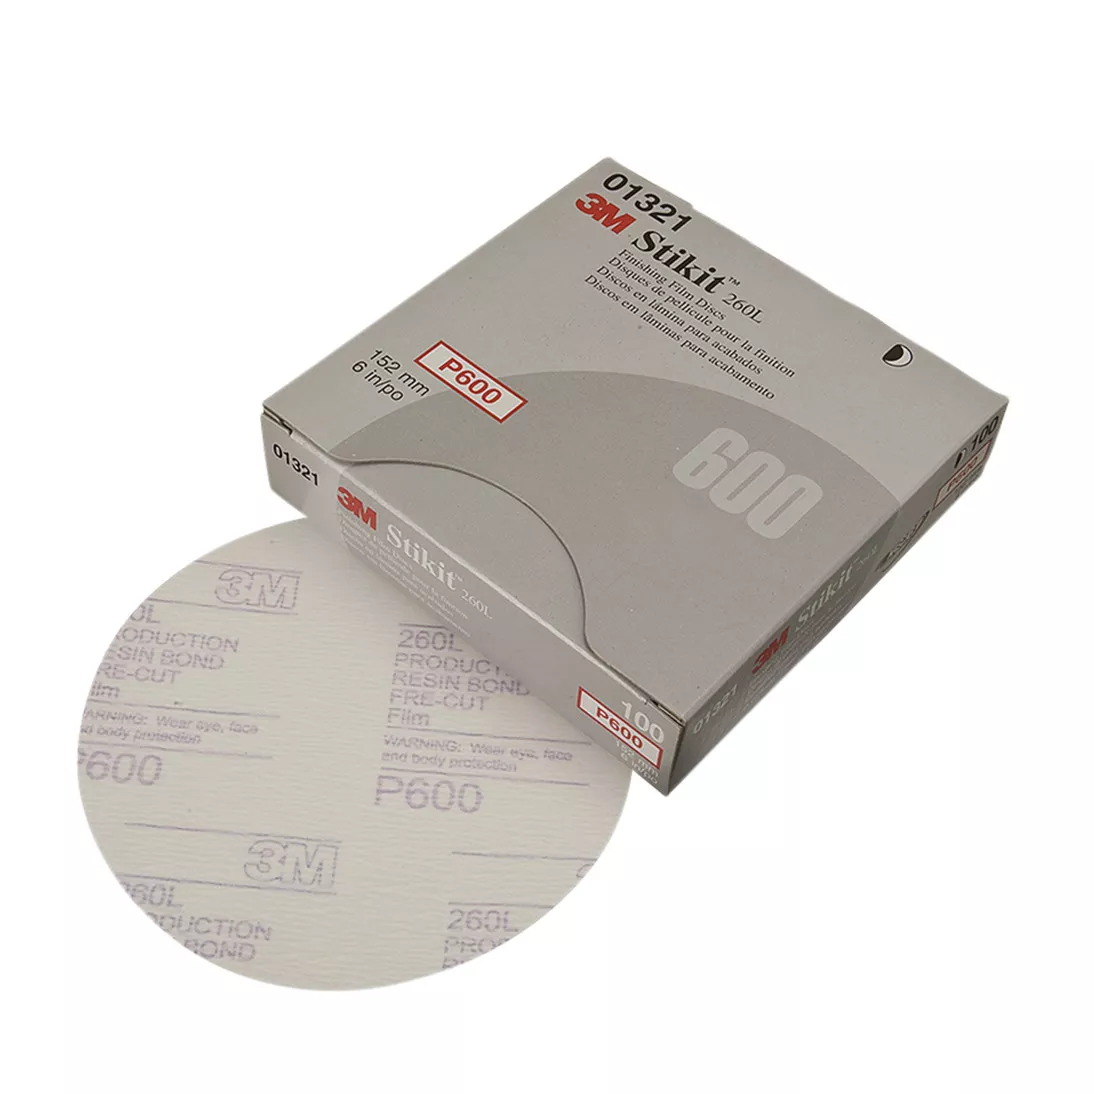 3M™ Stikit™ Finishing Film Abrasive Disc 260L, 01321, 6 in, P600, 100
discs per carton, 4 cartons per case